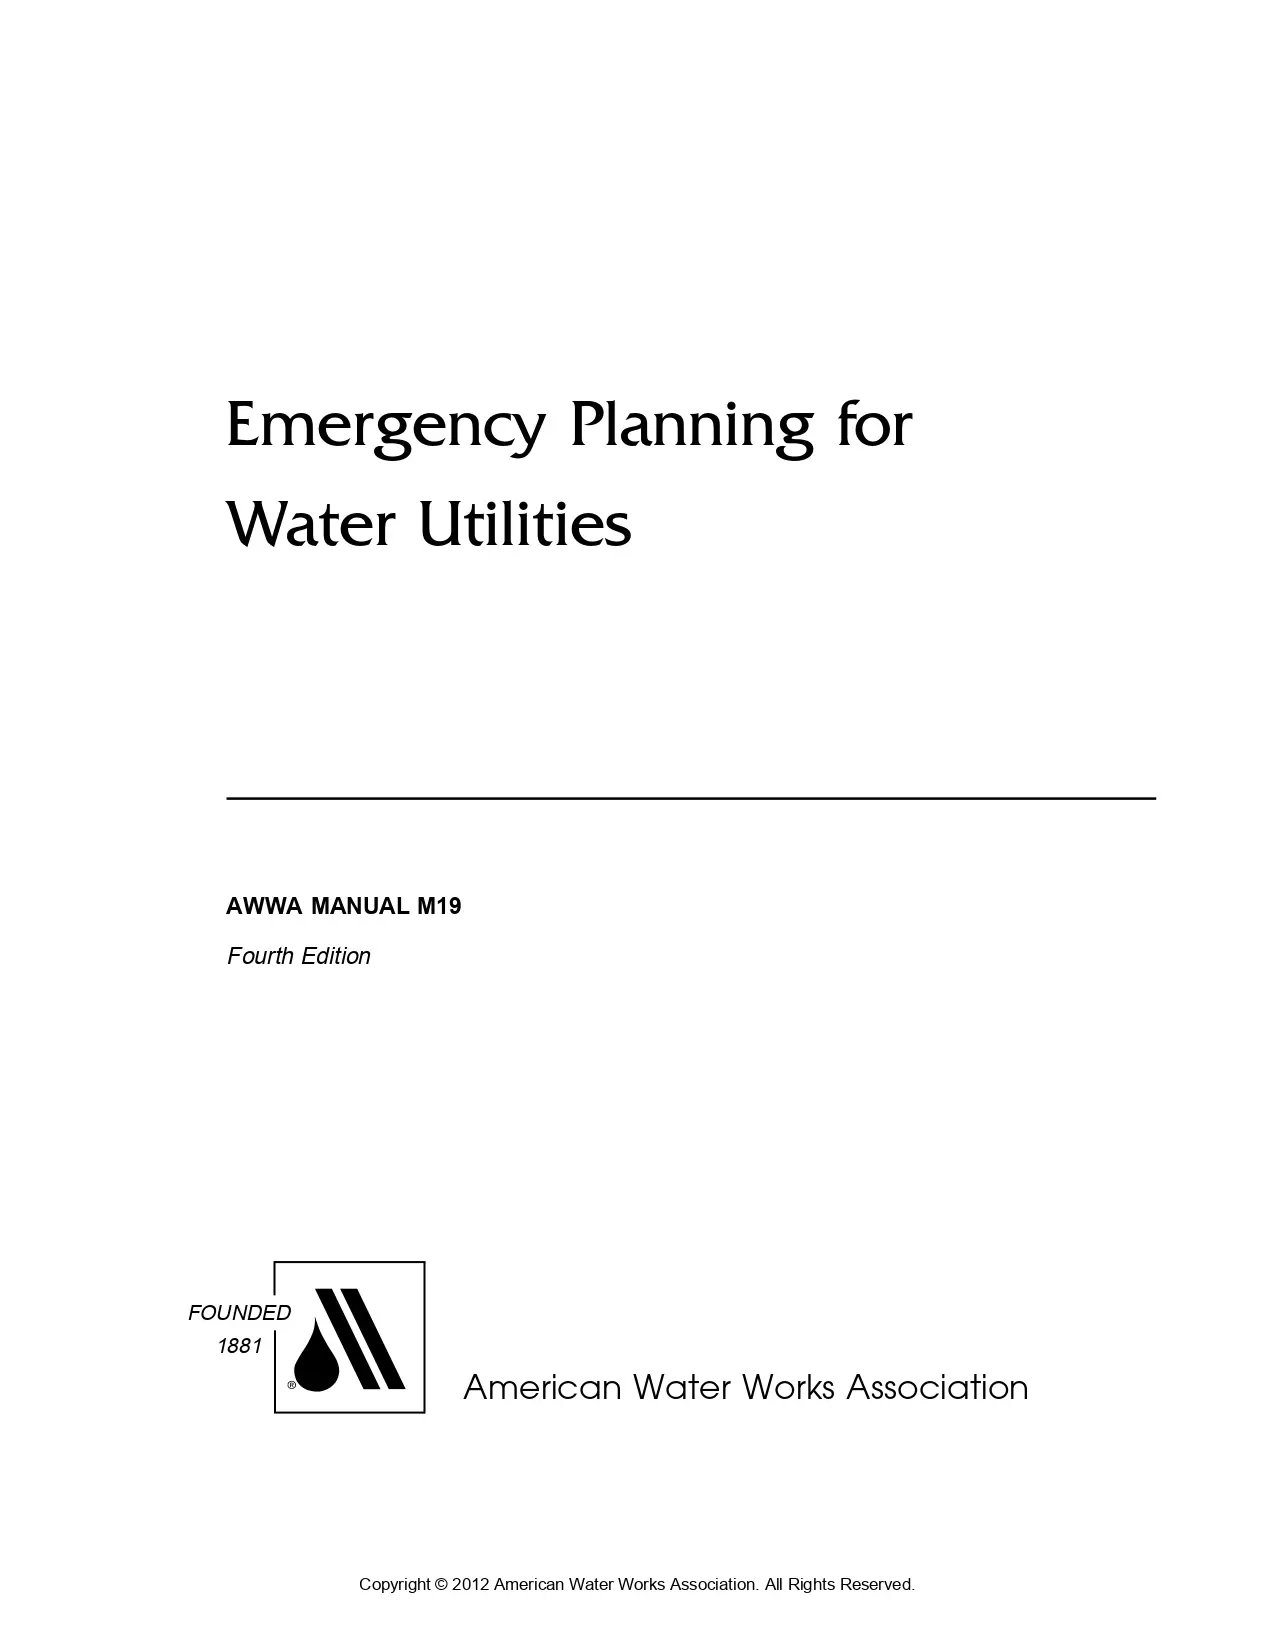 Emergency Planning for Water Utilities